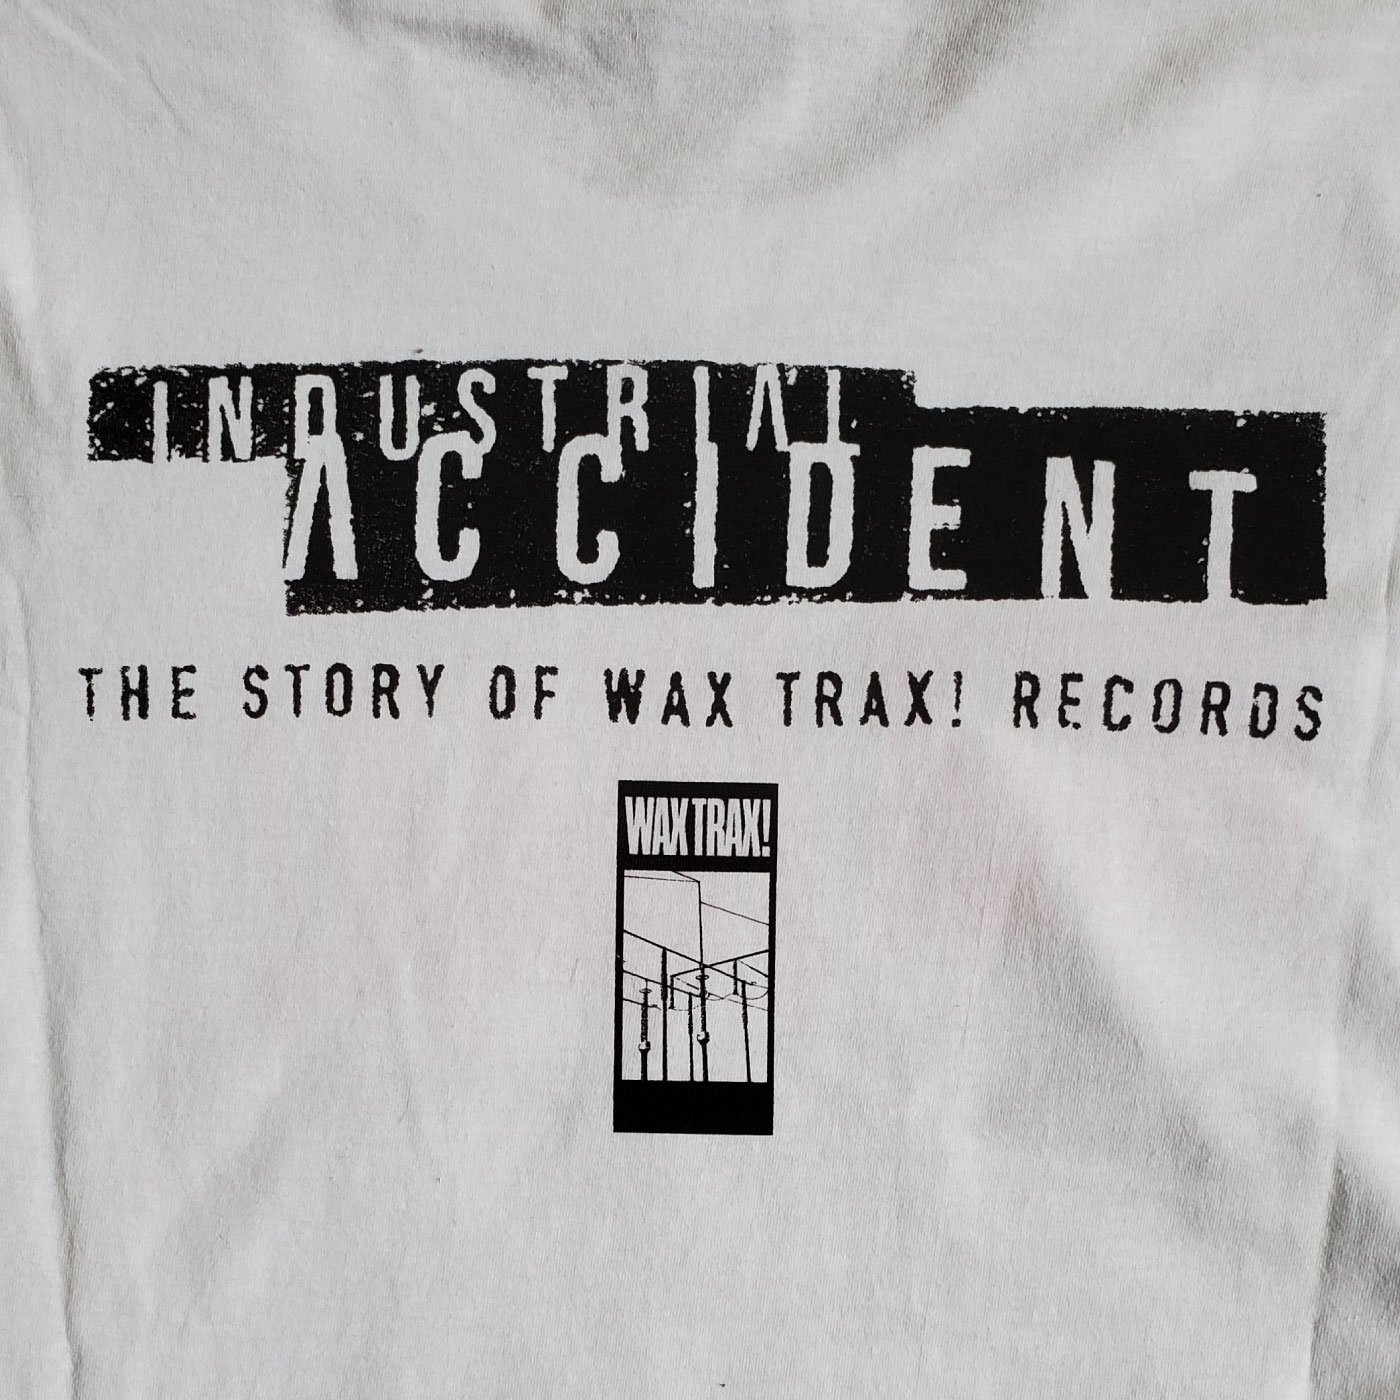 WAX TRAX! - T-Shirt / Industrial Accident Limited Promo | Wax Trax! Records